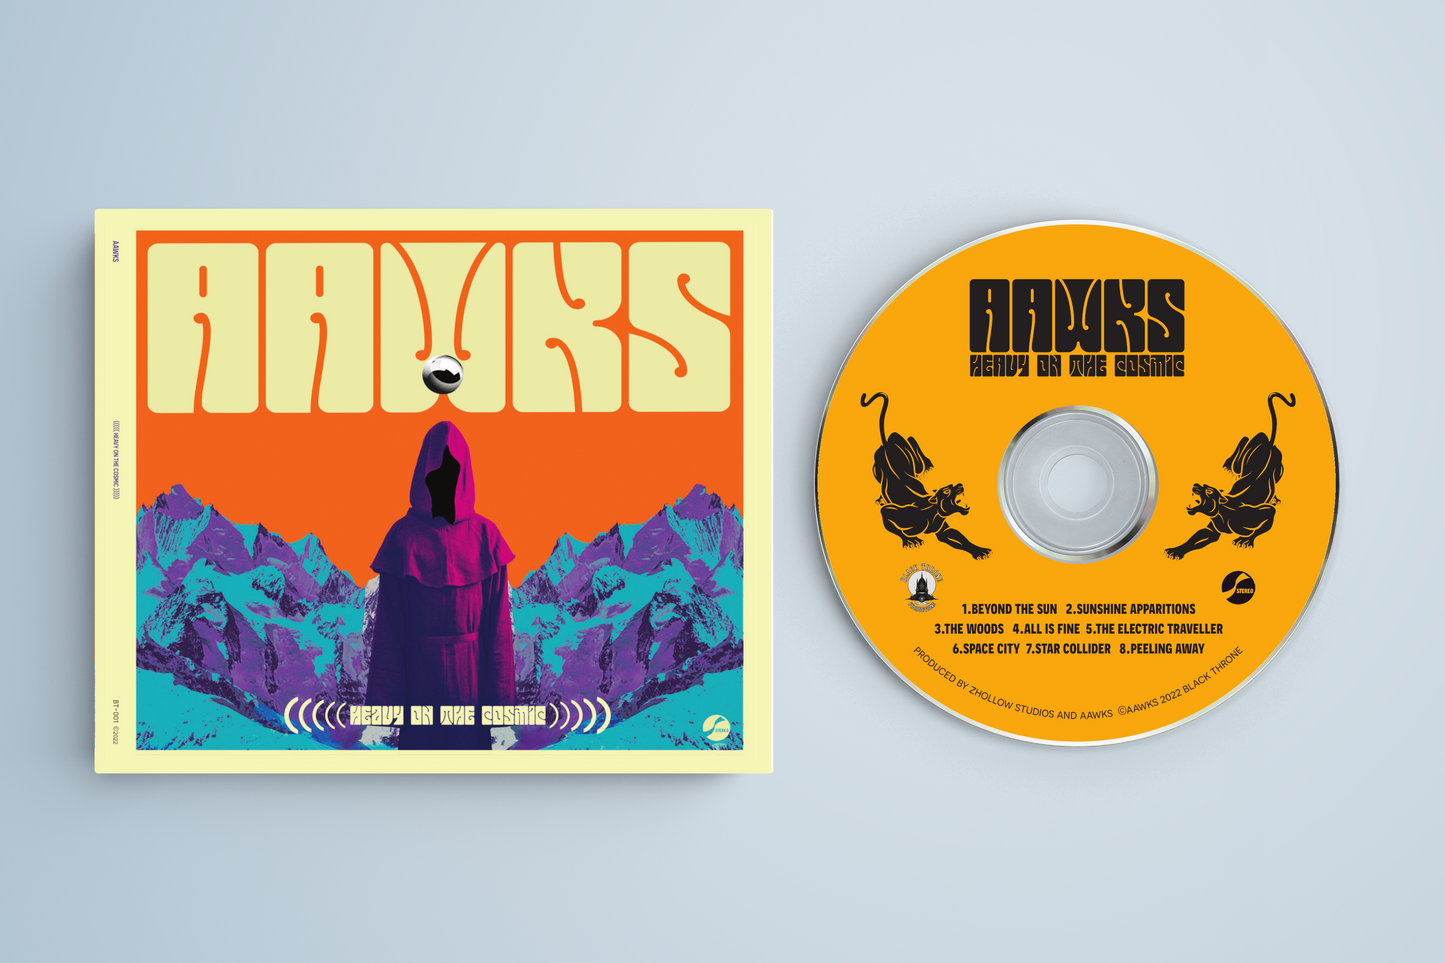 AAWKS - (((((HEAVY ON THE COSMIC))))) - CD